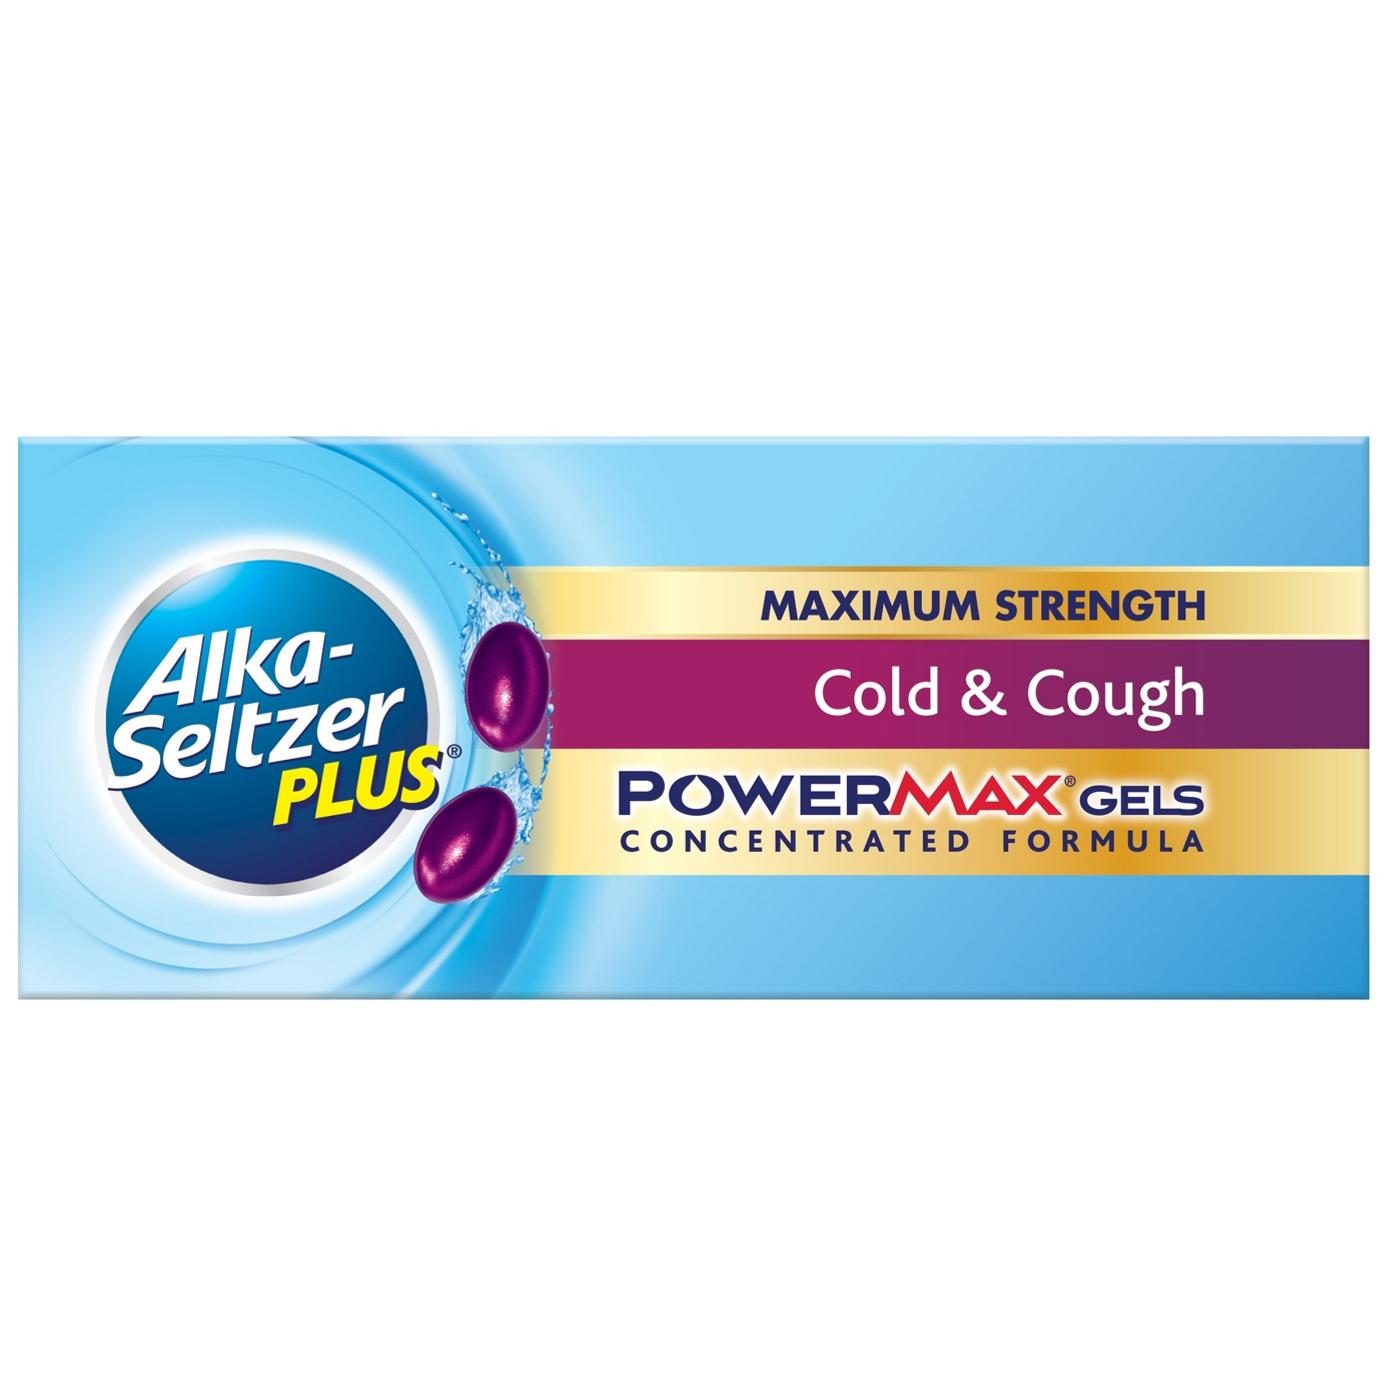 Alka-Seltzer Plus Cold & Cough PowerMax Gels; image 2 of 6